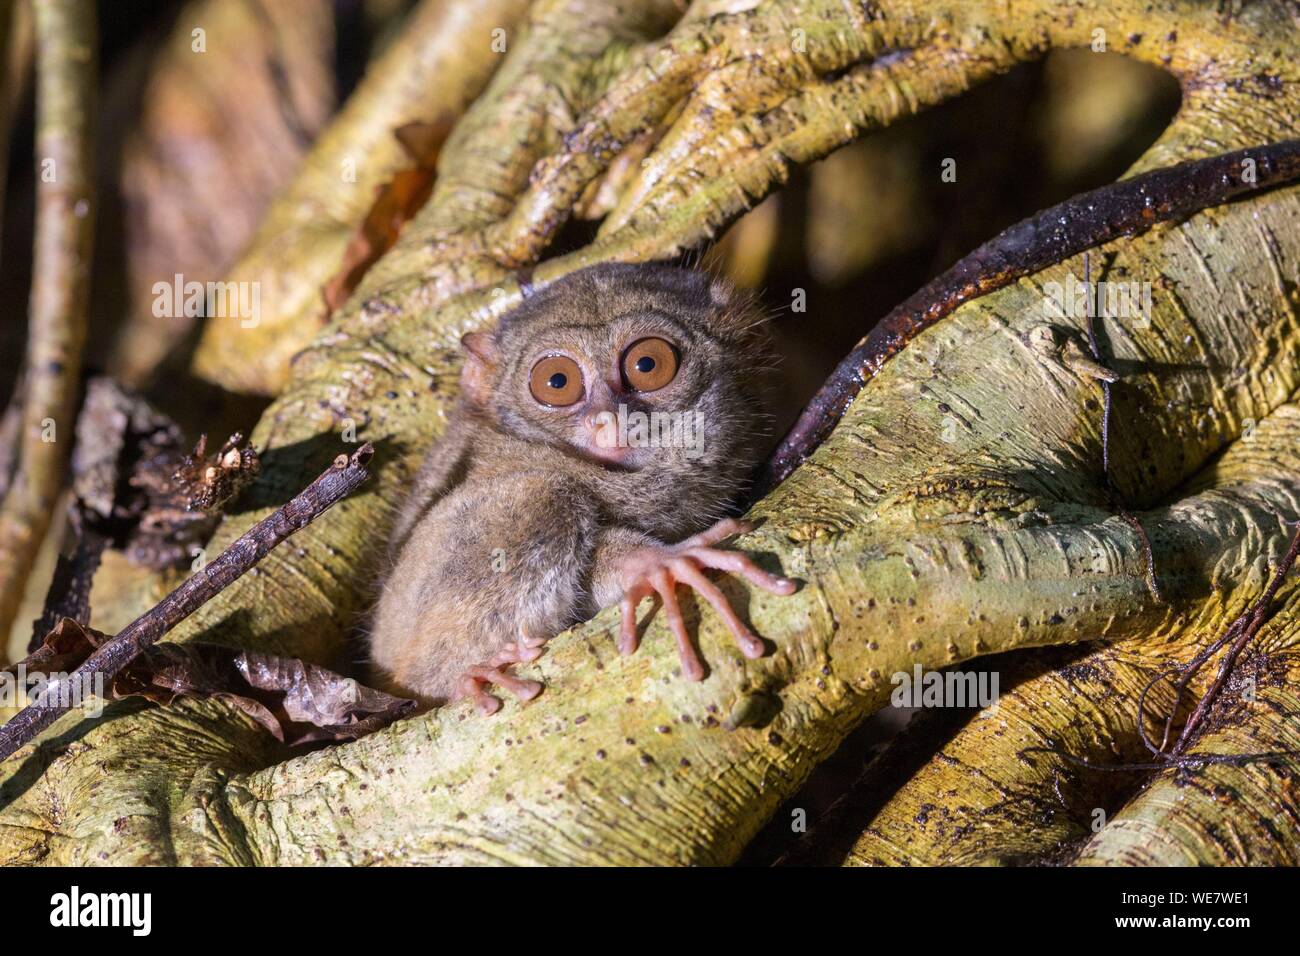 Indonesia, Celebes, Sulawesi, Tangkoko National Park, Spectral tarsier (Tarsius spectrum, also called Tarsius tarsier) Stock Photo